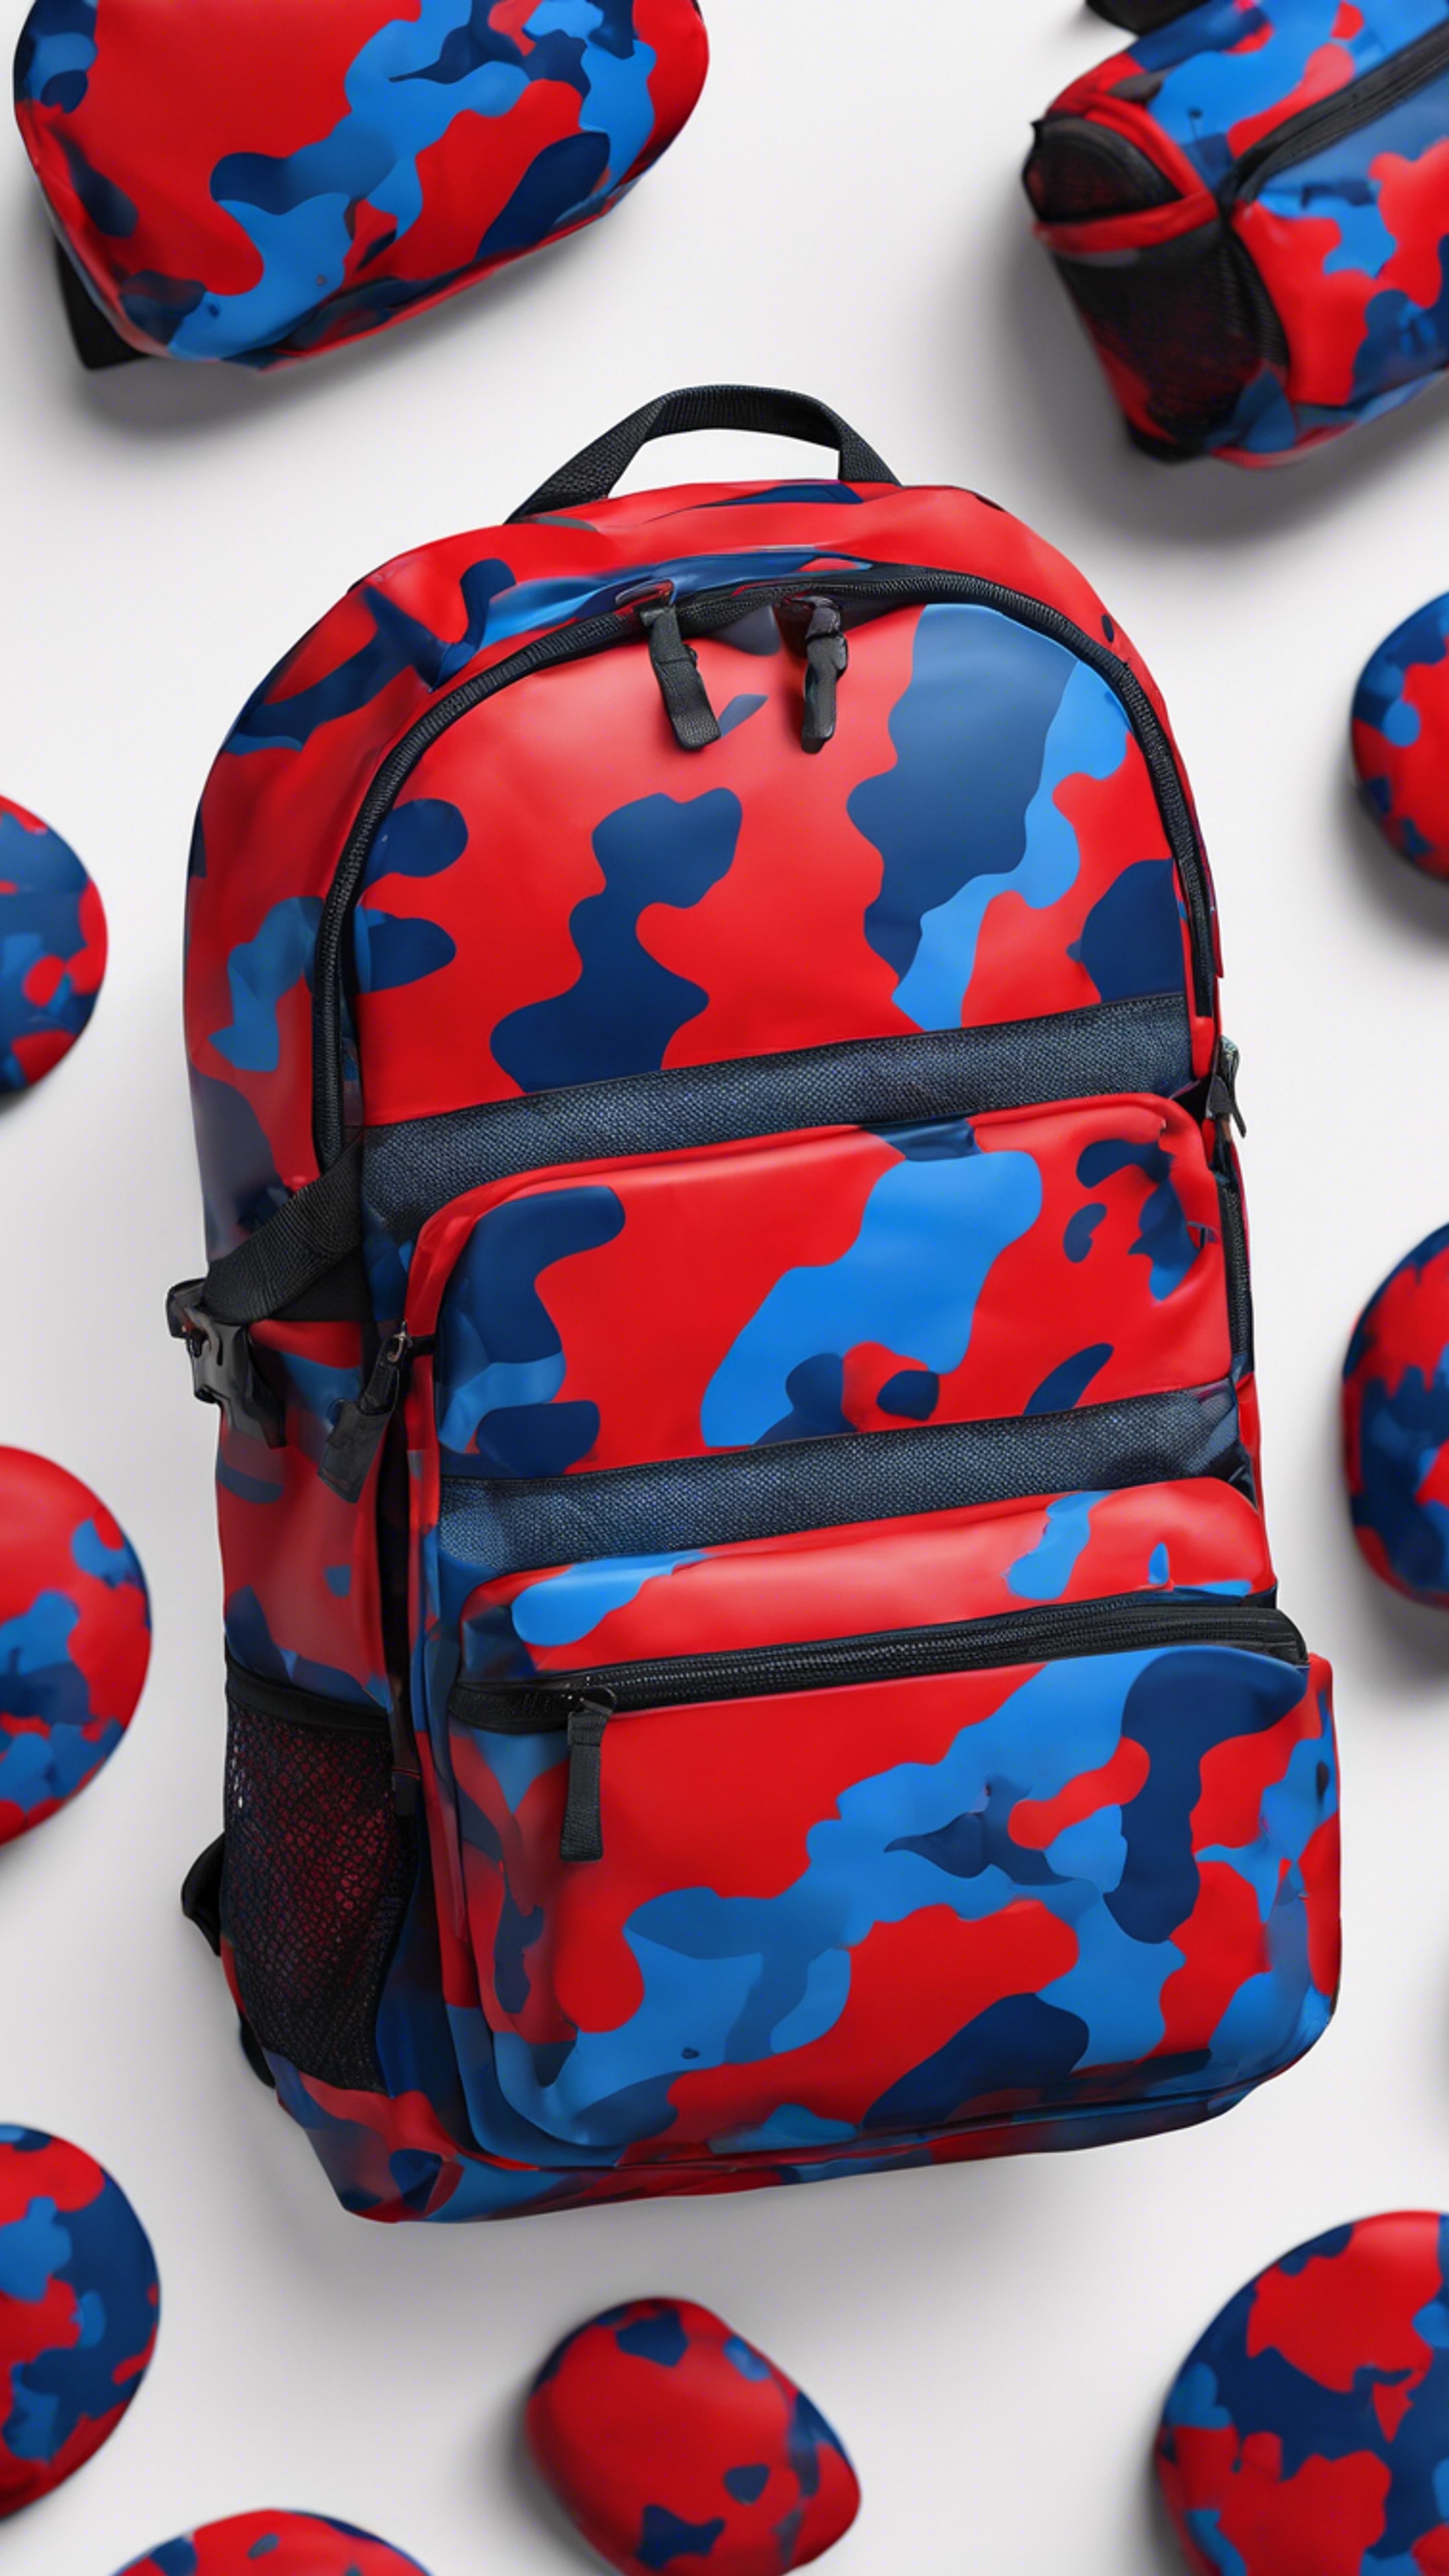 A seamless pattern of red and blue camouflage like on a sports backpack. Tapeta[ebf2c58b20f943e08eab]